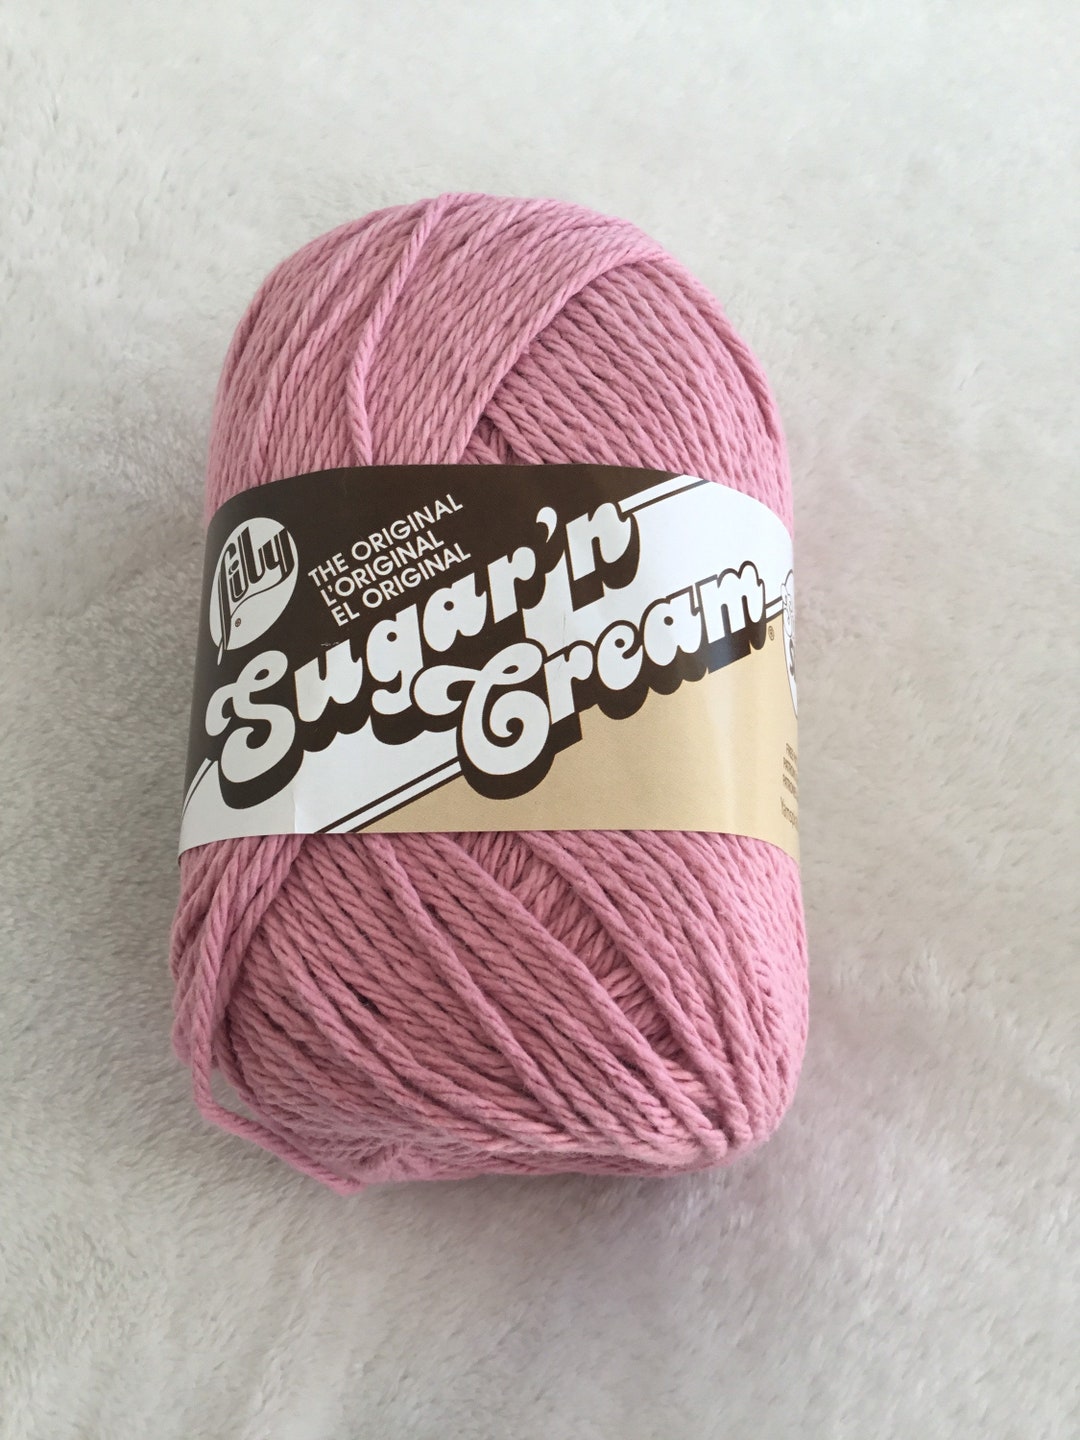 Lily Sugarn Cream The Original Super Size Yarn 4oz113g Rose Pink Etsy